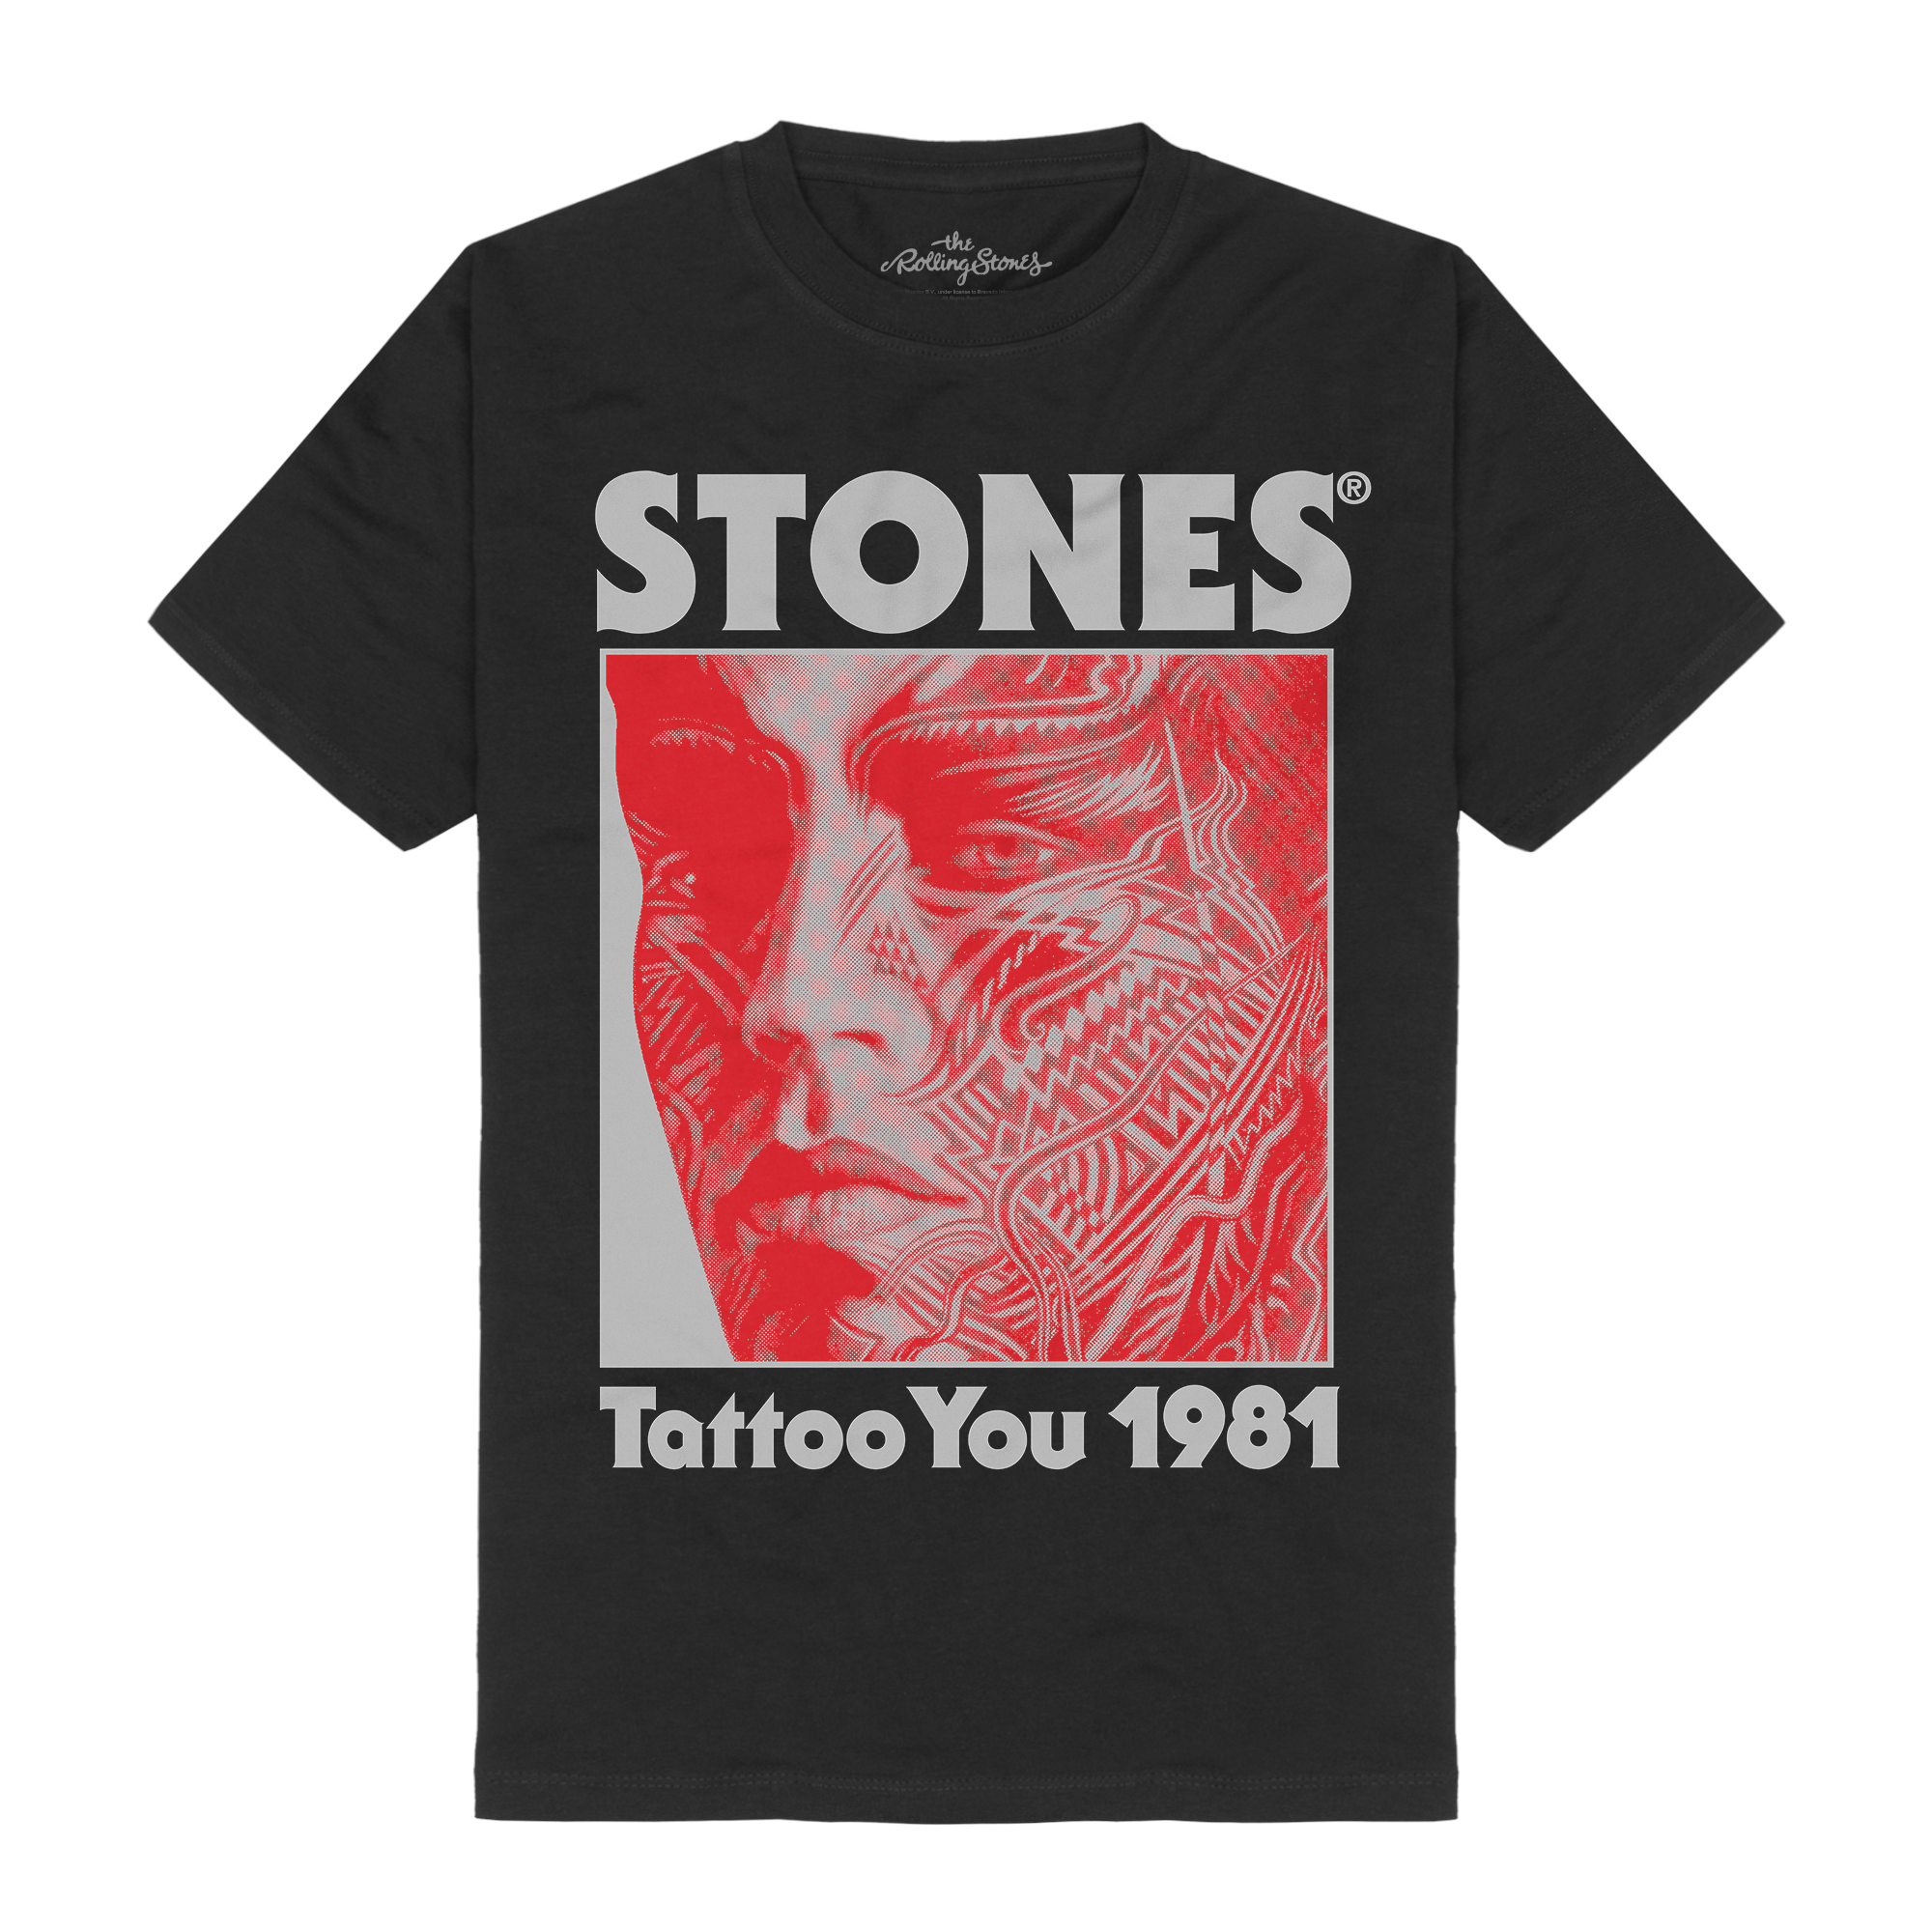 https://images.bravado.de/prod/product-assets/product-asset-data/rolling-stones-the/the-rolling-stones/products/138453/web/396597/image-thumb__396597__3000x3000_original/The-Rolling-Stones-Tattoo-You-40th-Anniversary-T-Shirt-schwarz-138453-396597.6d741e18.png